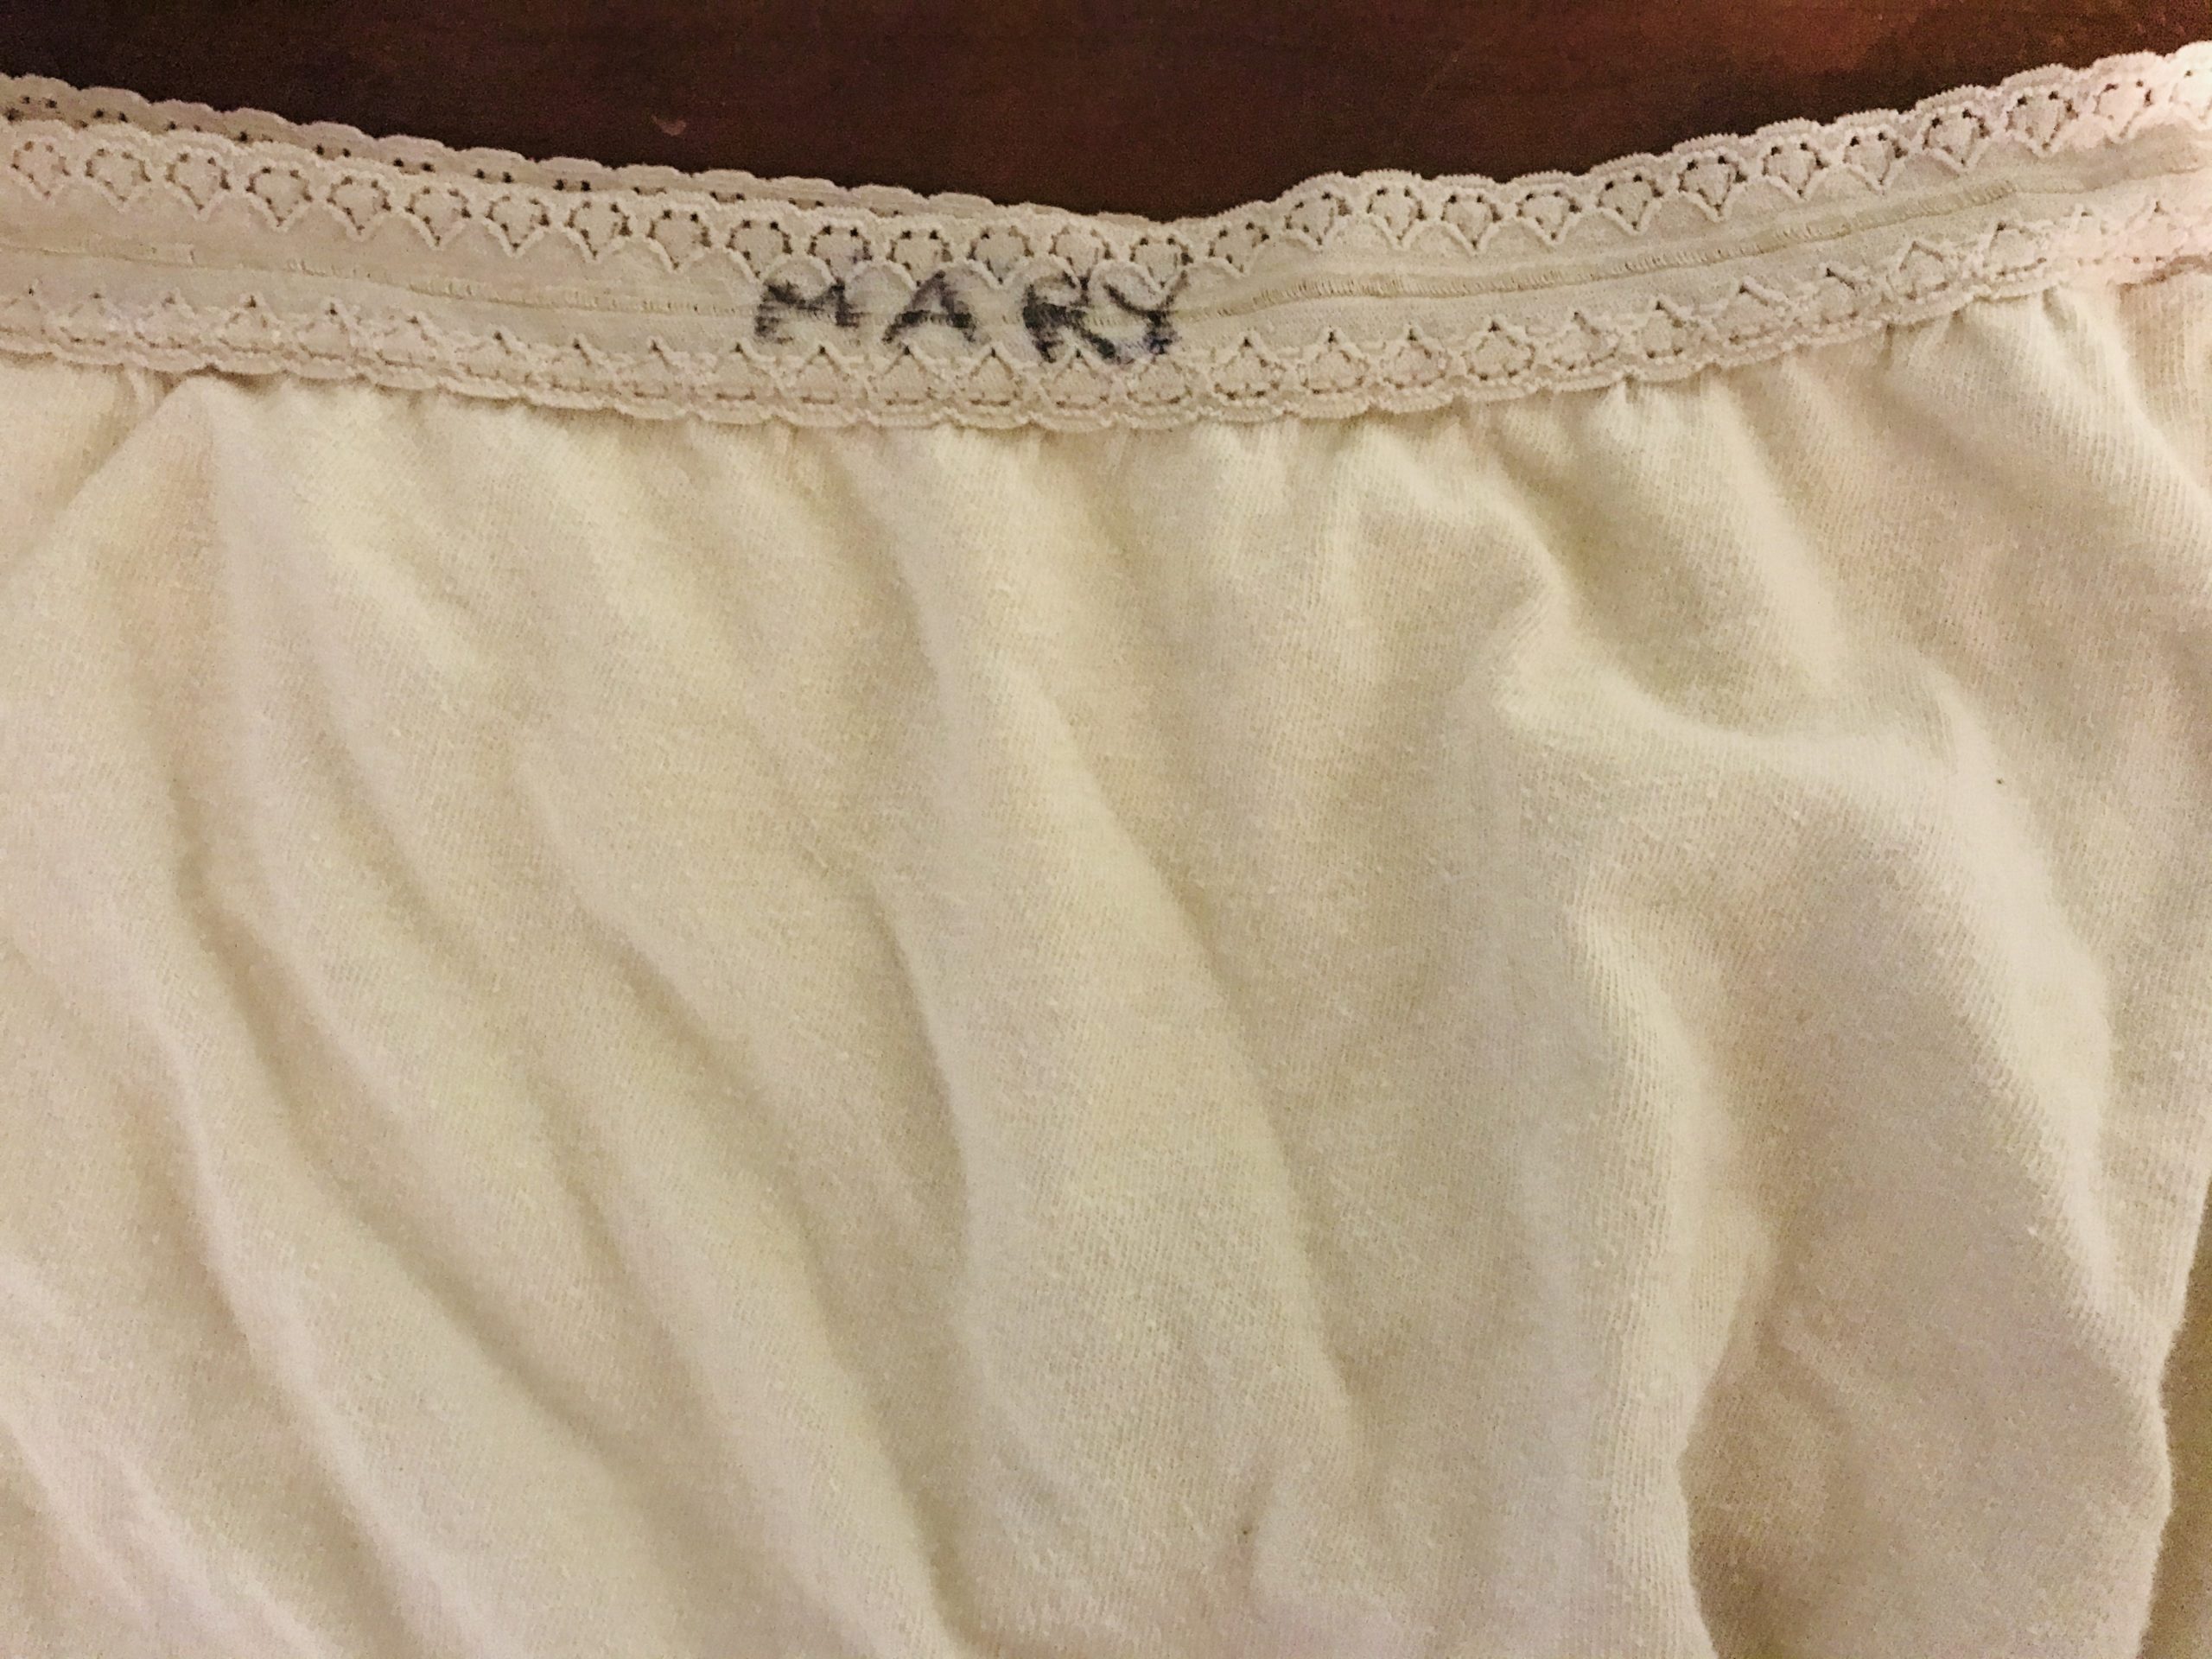 http://www.dadvmom.com/wp-content/uploads/2020/06/Grandmas-Underwear-scaled.jpg